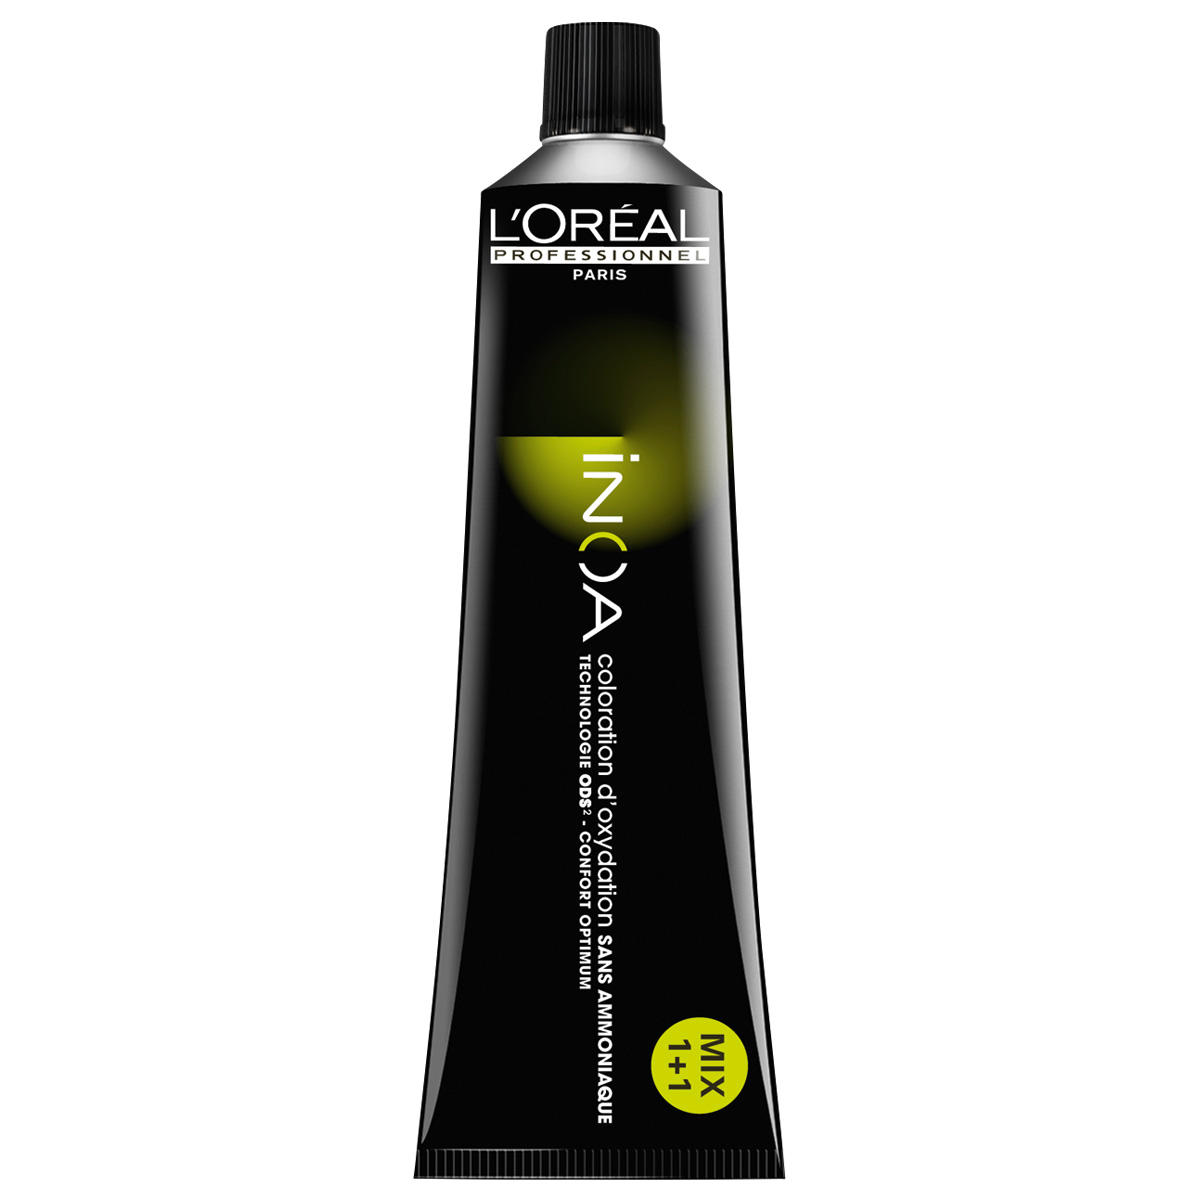 L'Oréal Professionnel Paris Coloration 6 Rubio oscuro, tubo 60 ml